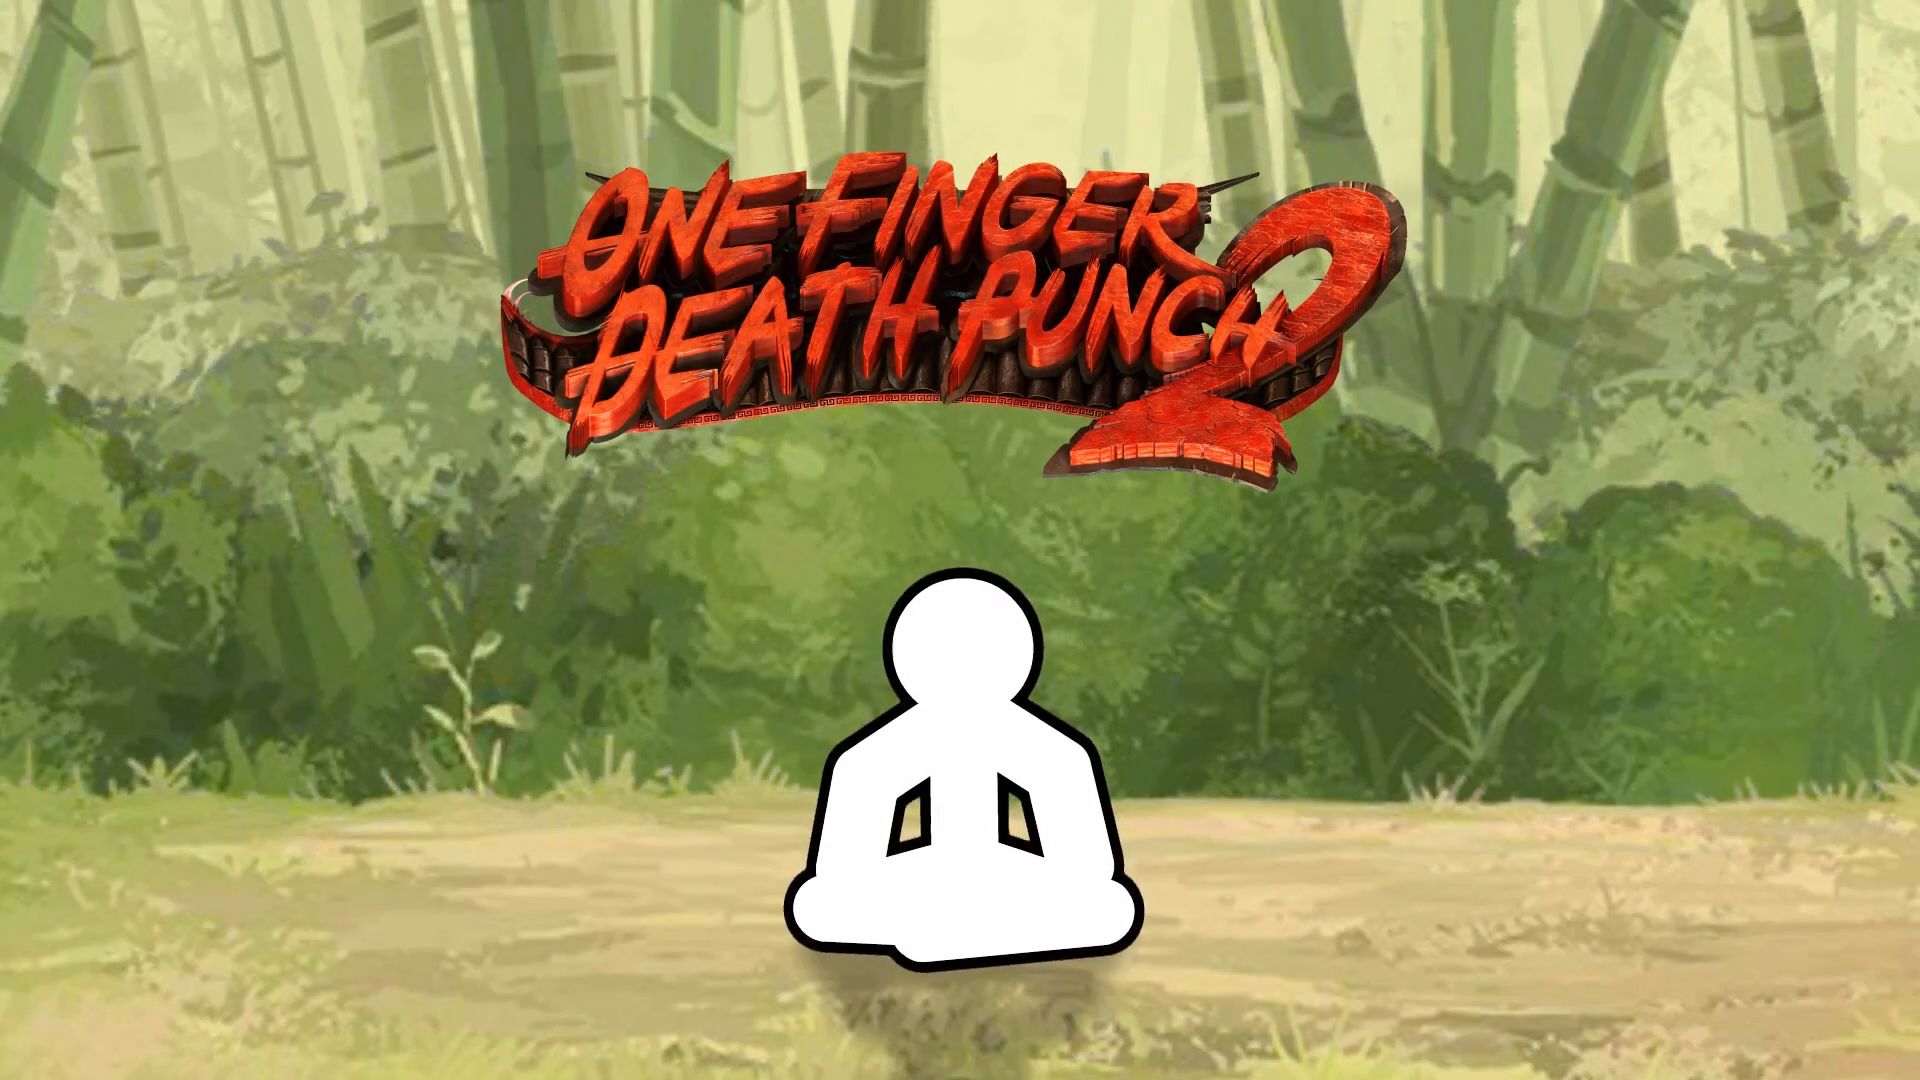 Descargar One Finger Death Punch 2 gratis para Android.